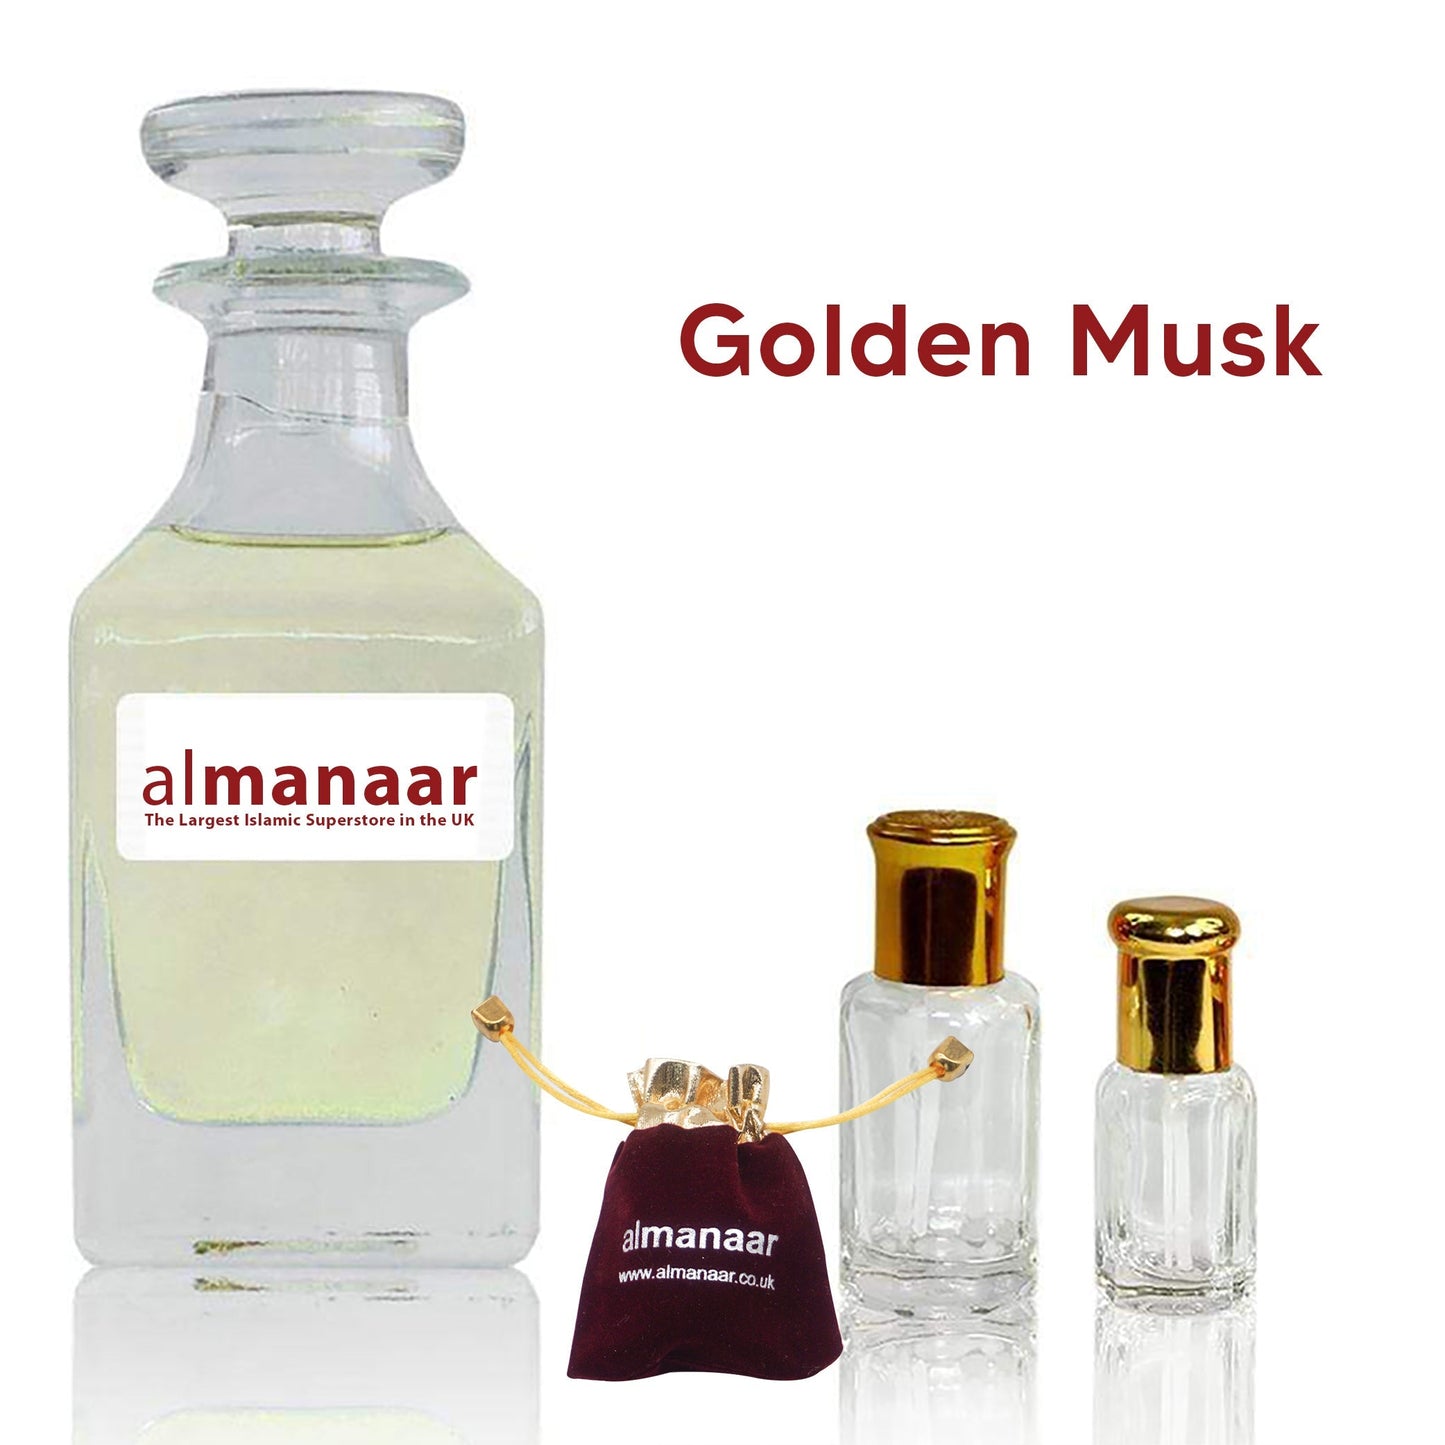 Golden Musk - Concentrated Perfume Oil by almanaar-almanaar Islamic Store